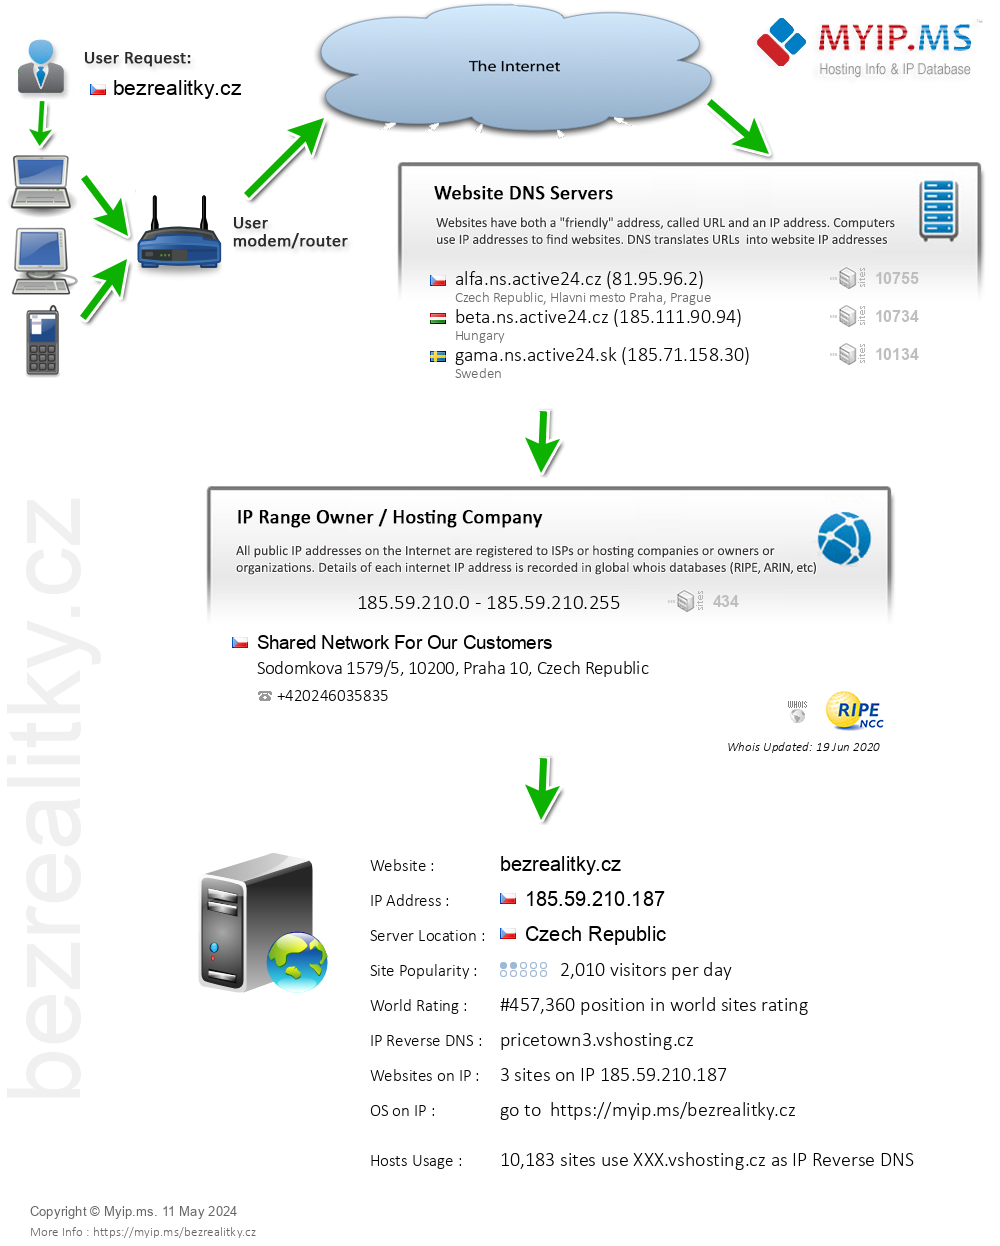 Bezrealitky.cz - Website Hosting Visual IP Diagram